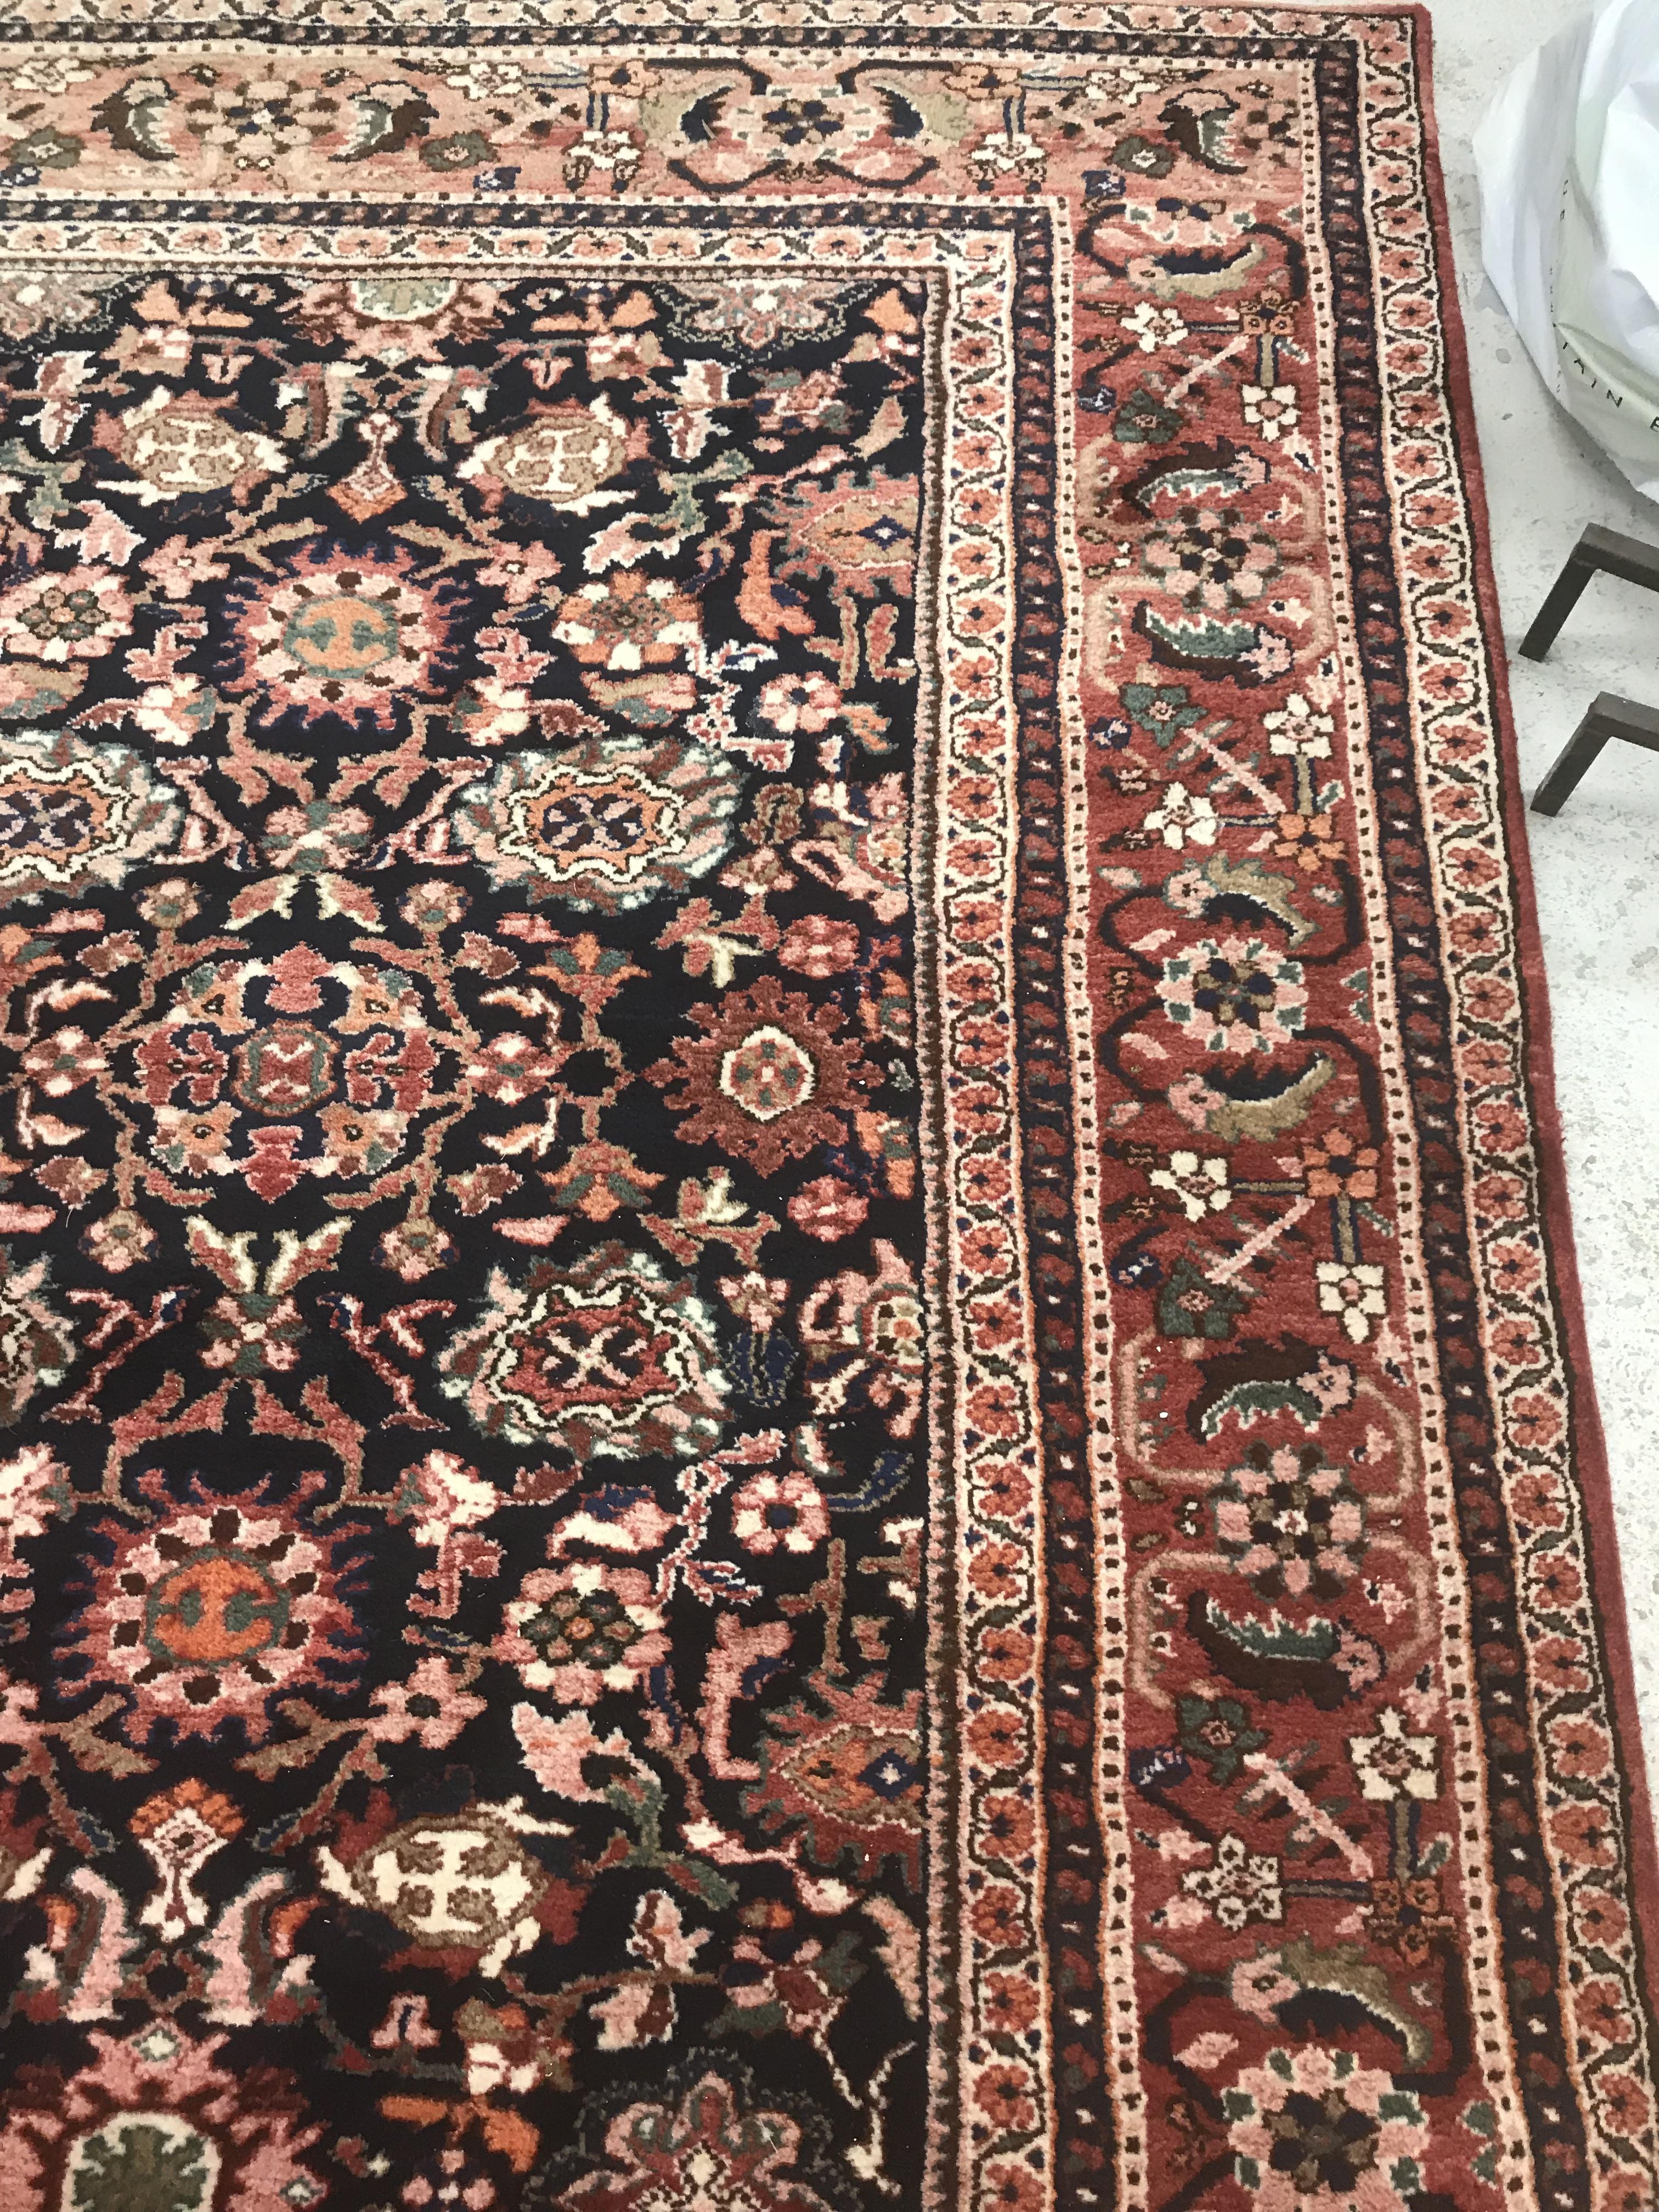 A 20th Century Afghan Kazak carpet, - Image 14 of 36